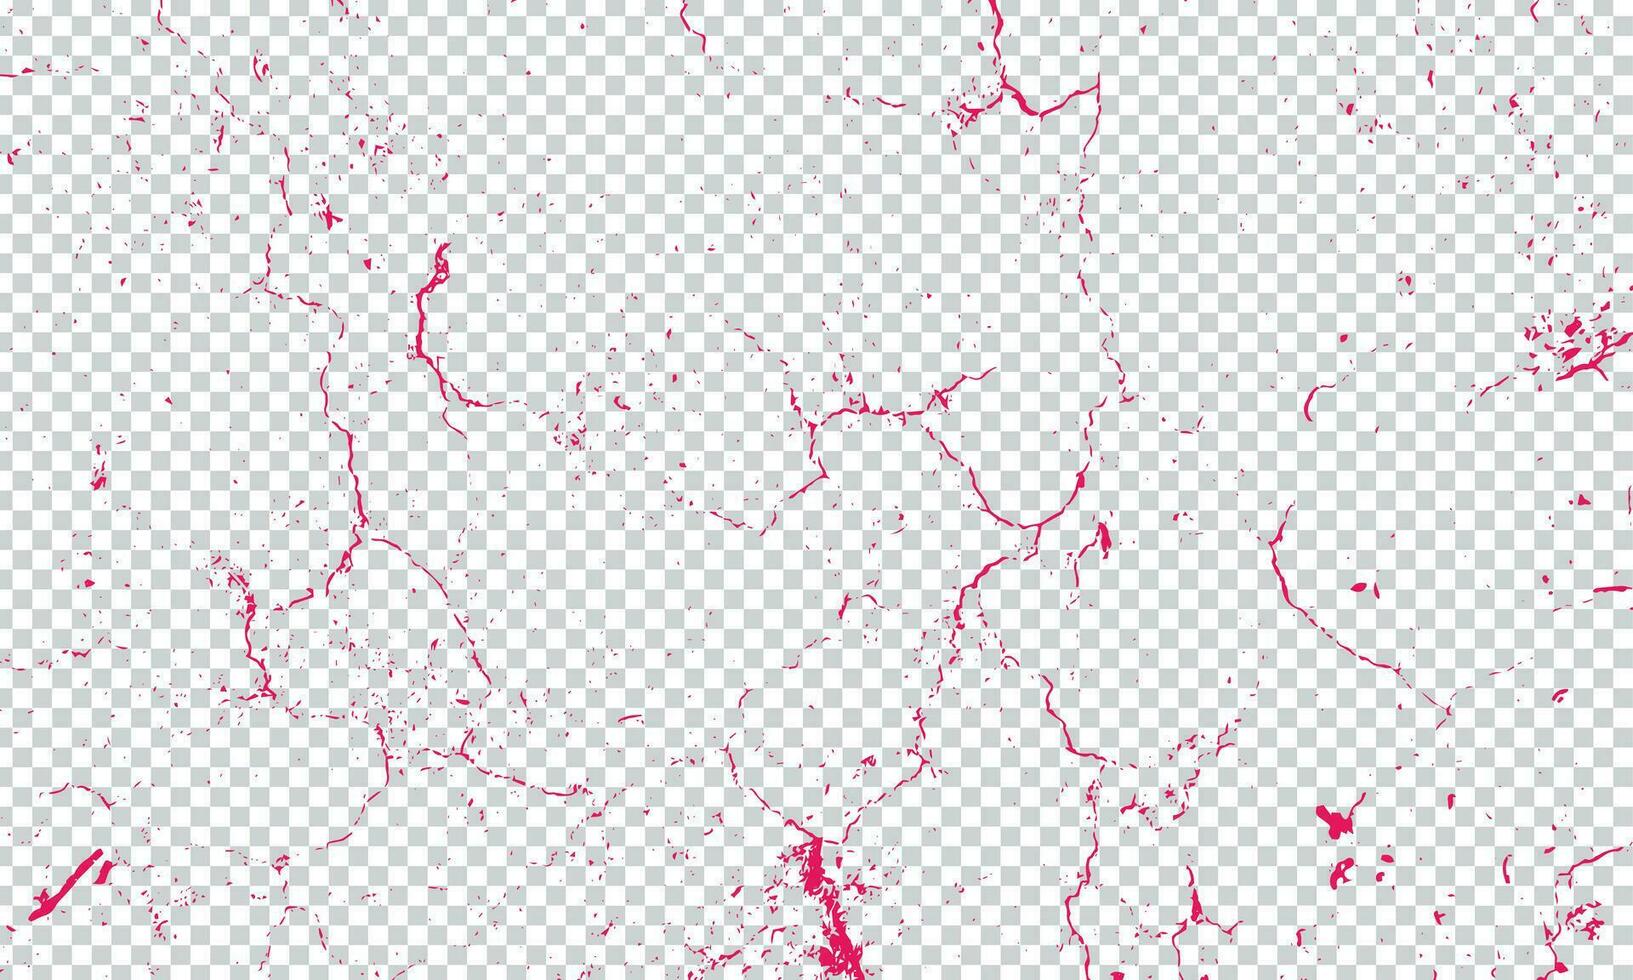 grungy, spray dark broken, abstract red fluid spattering grunge background texture vector blots blotches surface pink